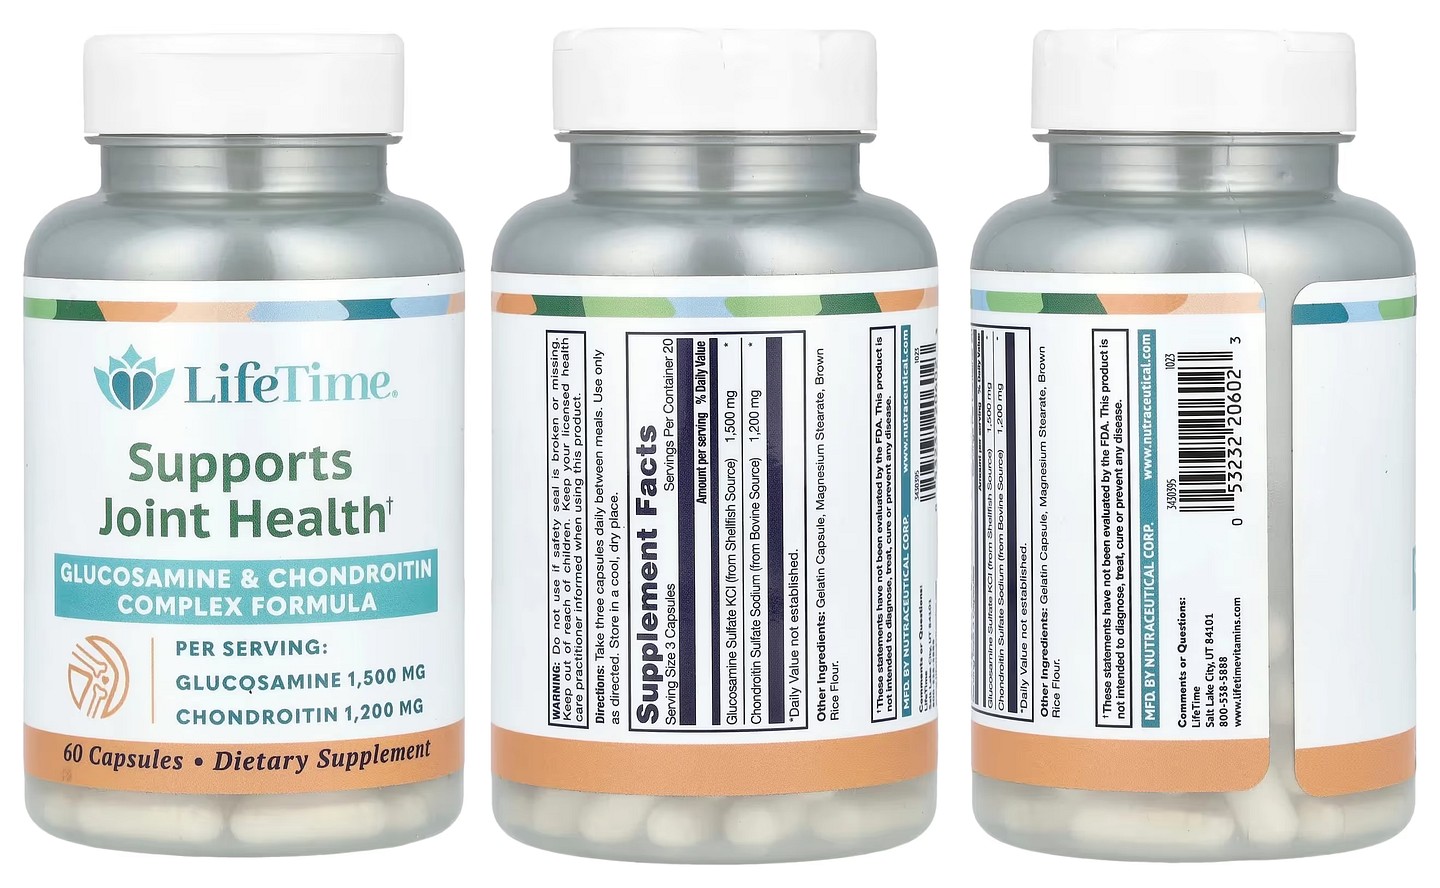 LifeTime Vitamins, Glucosamine & Chondroitin Complex Formula packaging